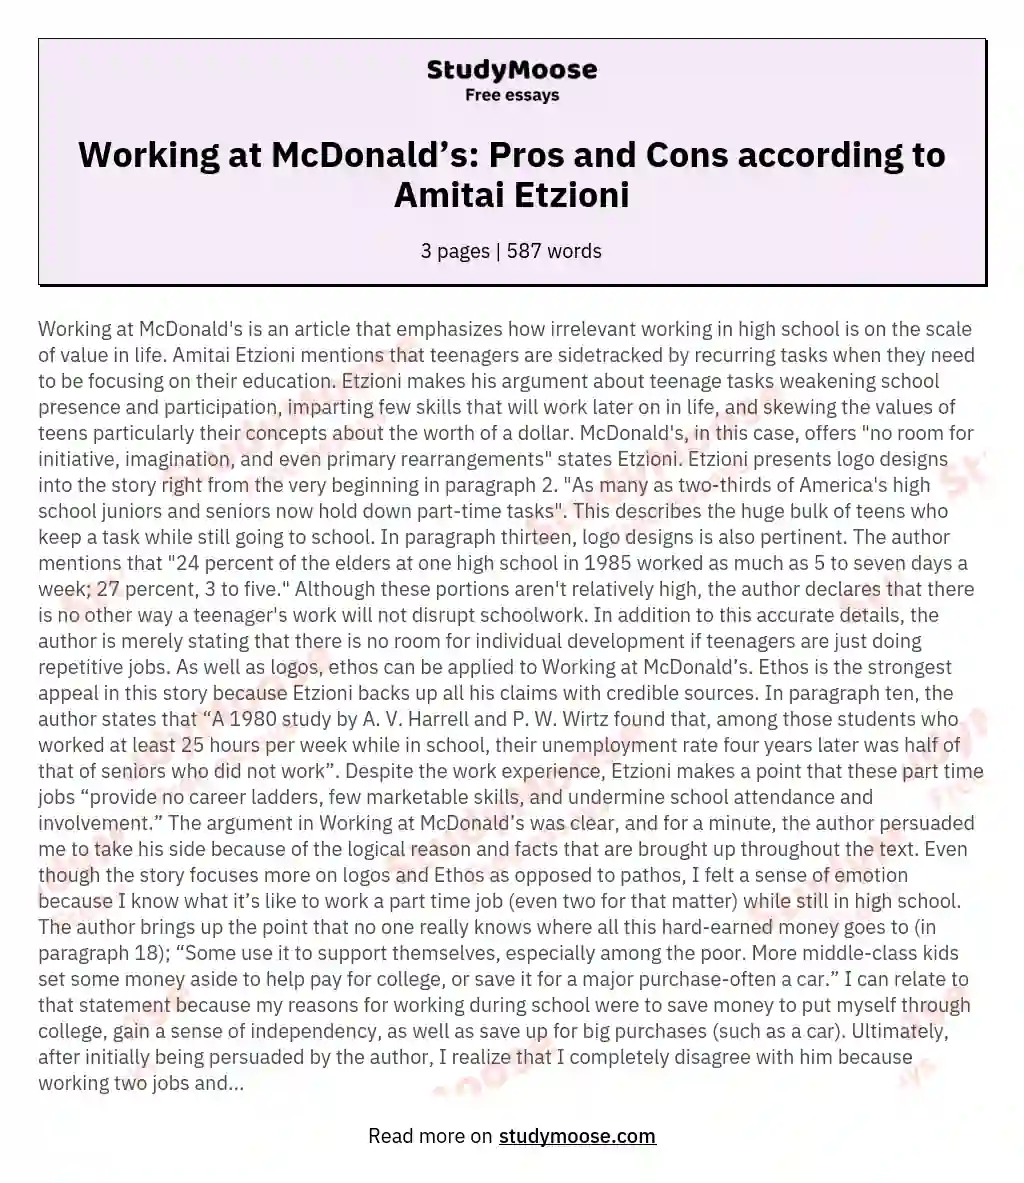 Working at McDonald’s: Pros and Cons according to Amitai Etzioni